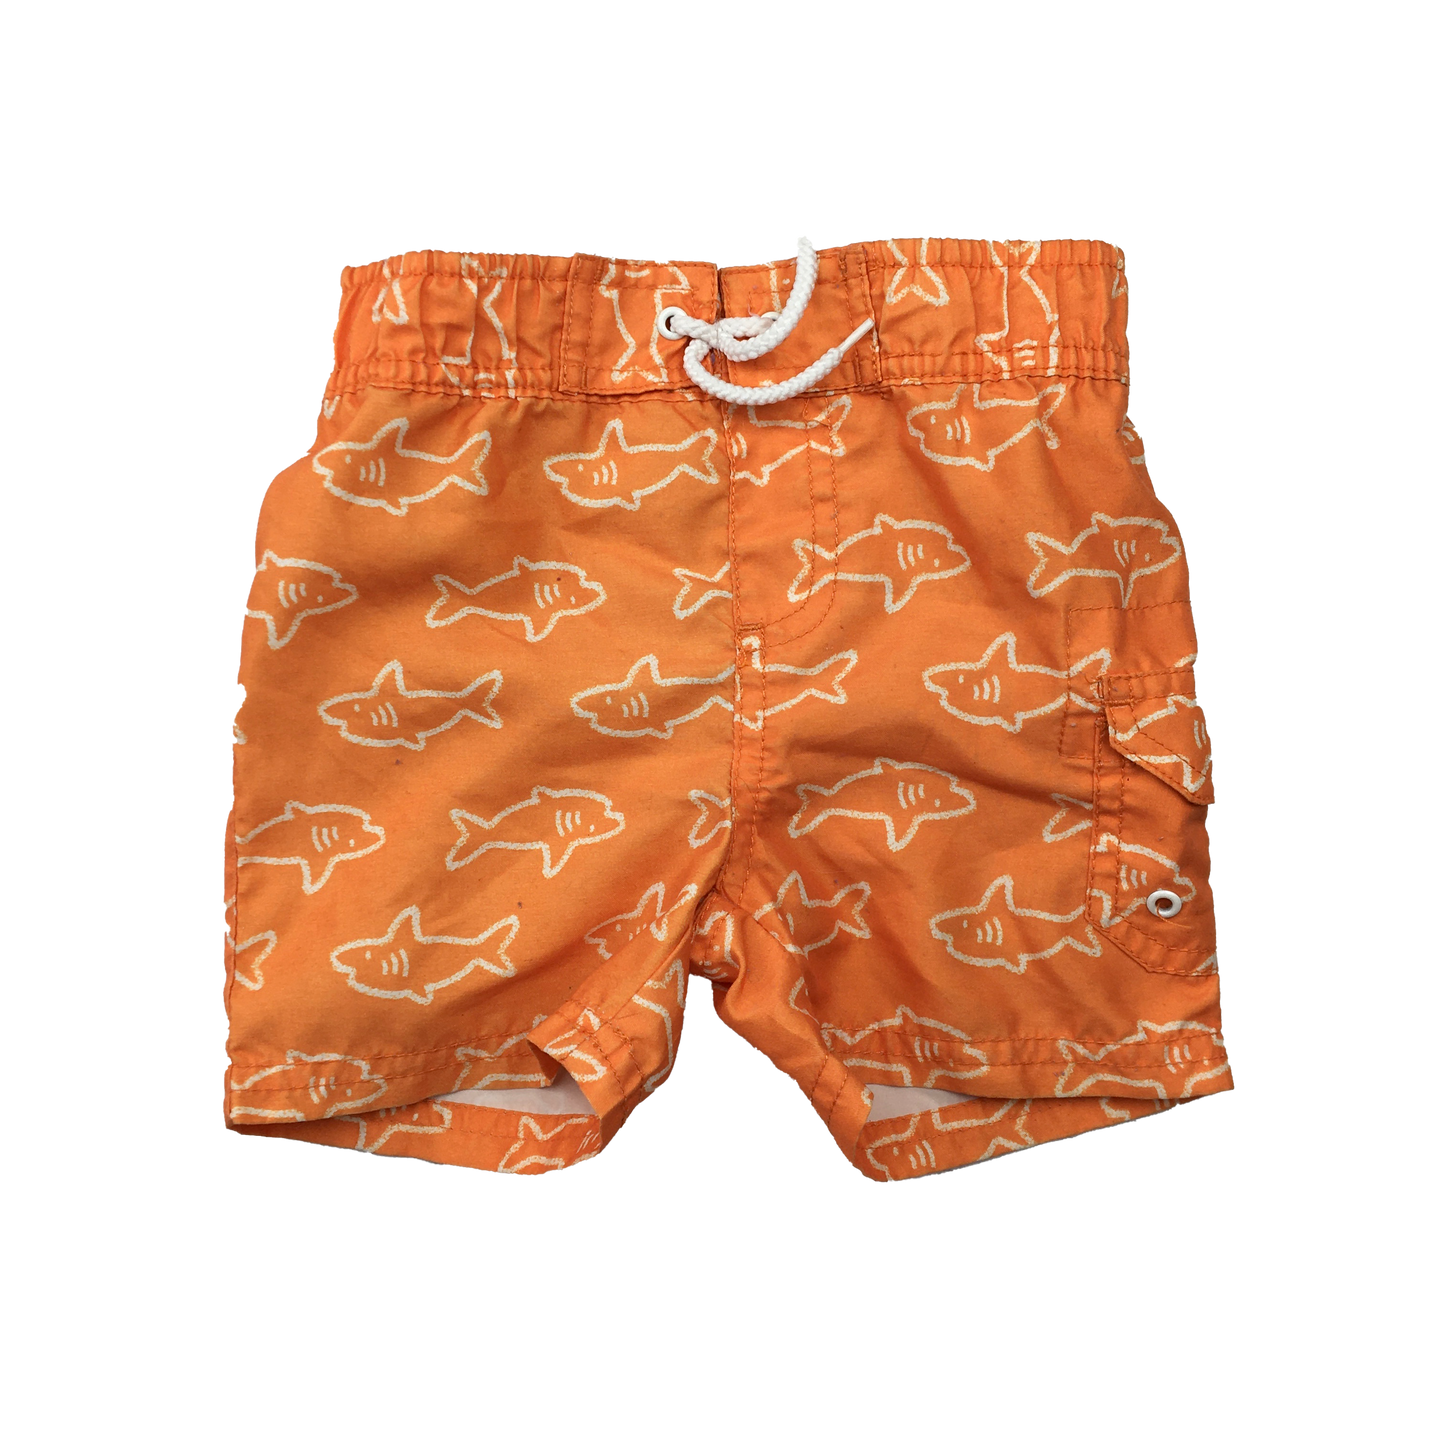 Joe Fresh Orange Swim Trunks with Sharks 6-12M